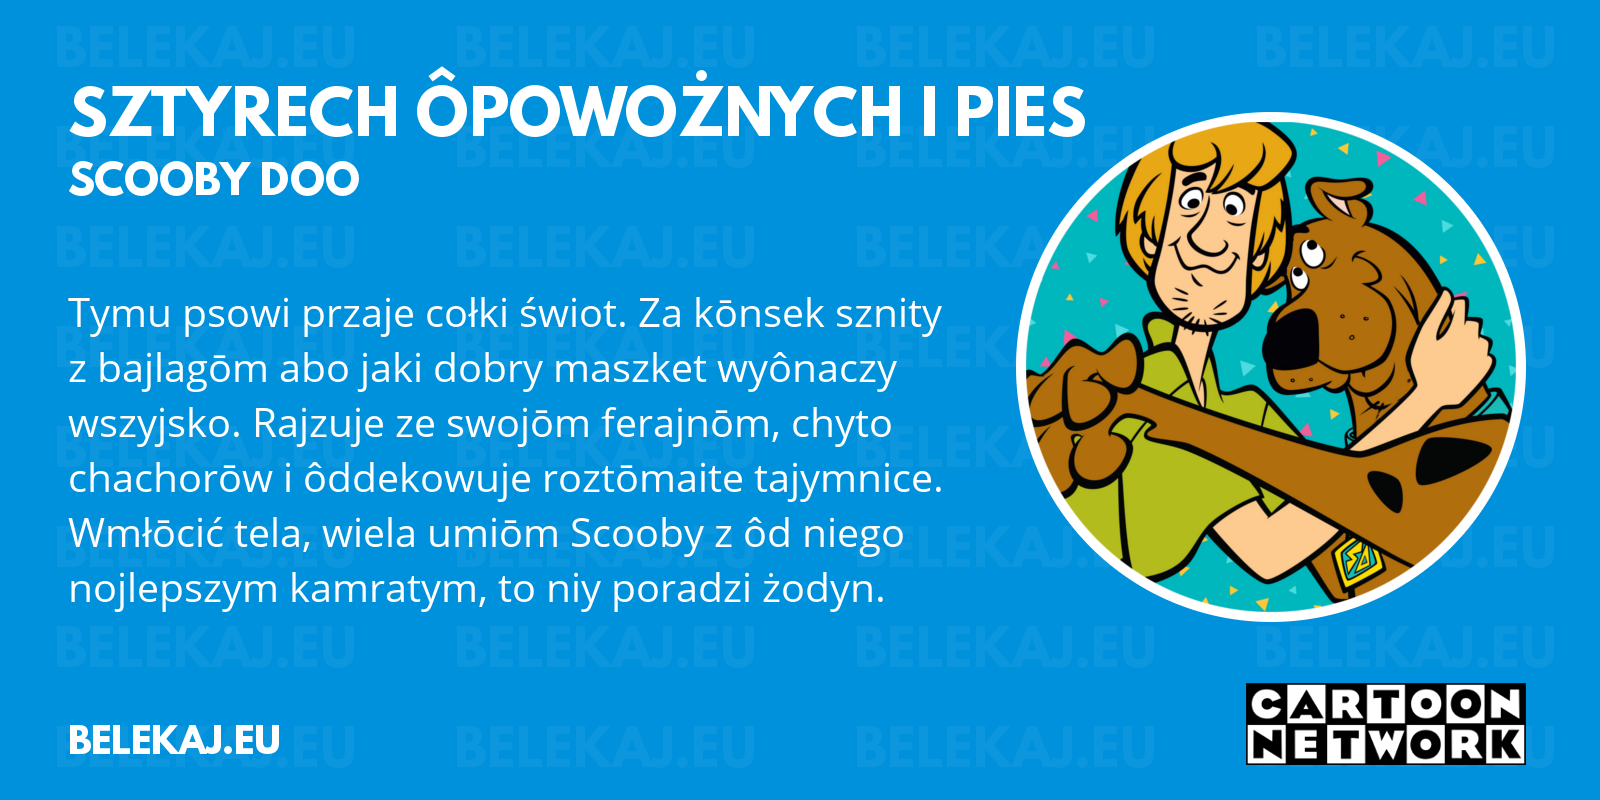 Scooby Doo, Cartoon Network po śląsku - blog bele kaj